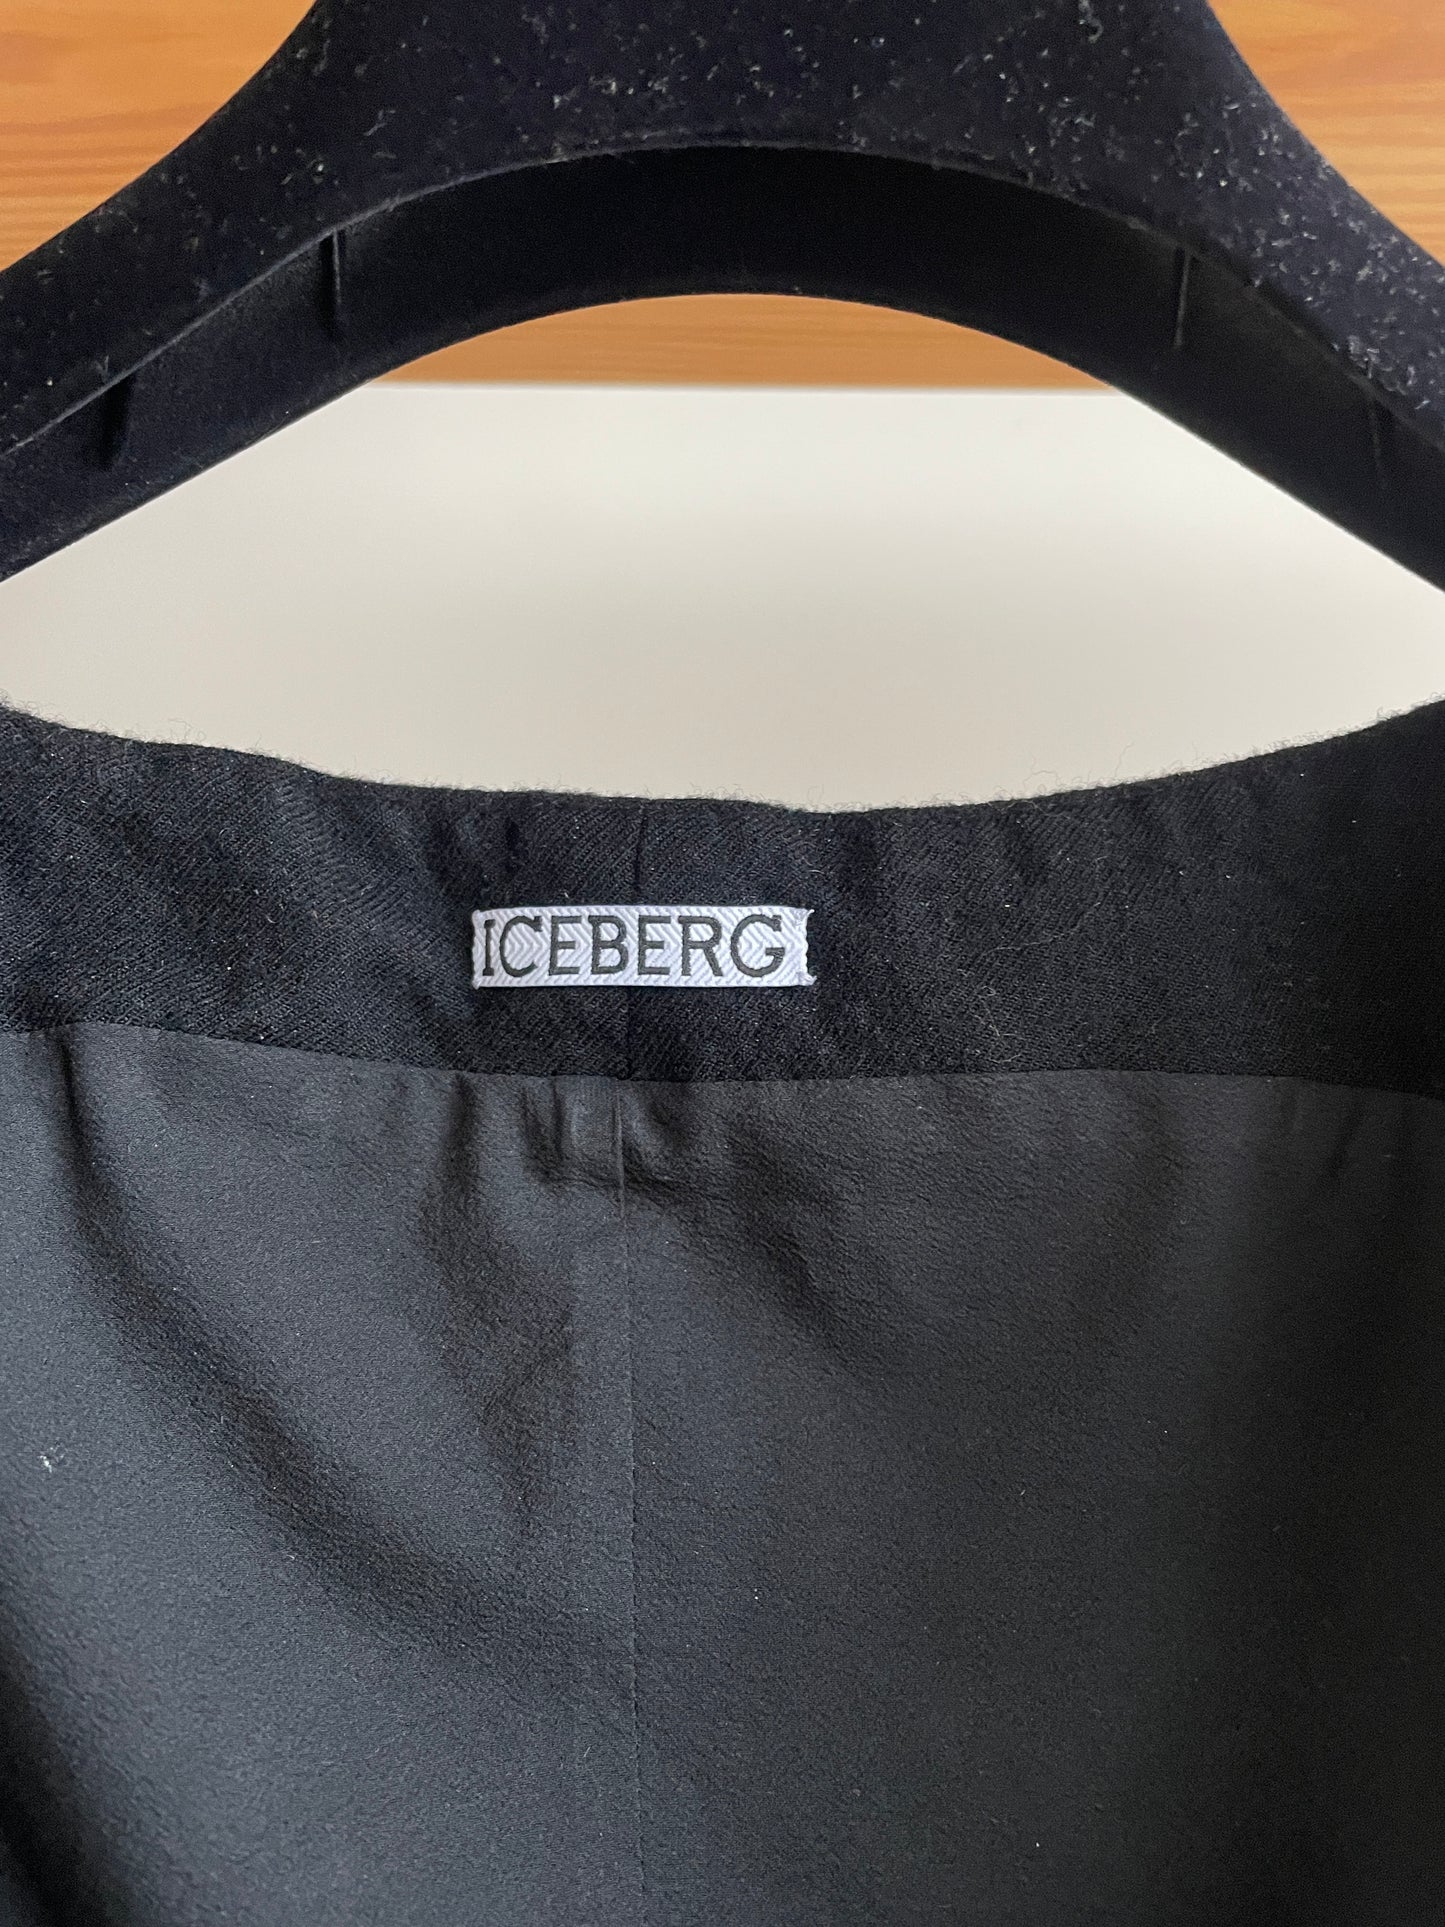 Iceberg 90's wool bustier top in grey and black